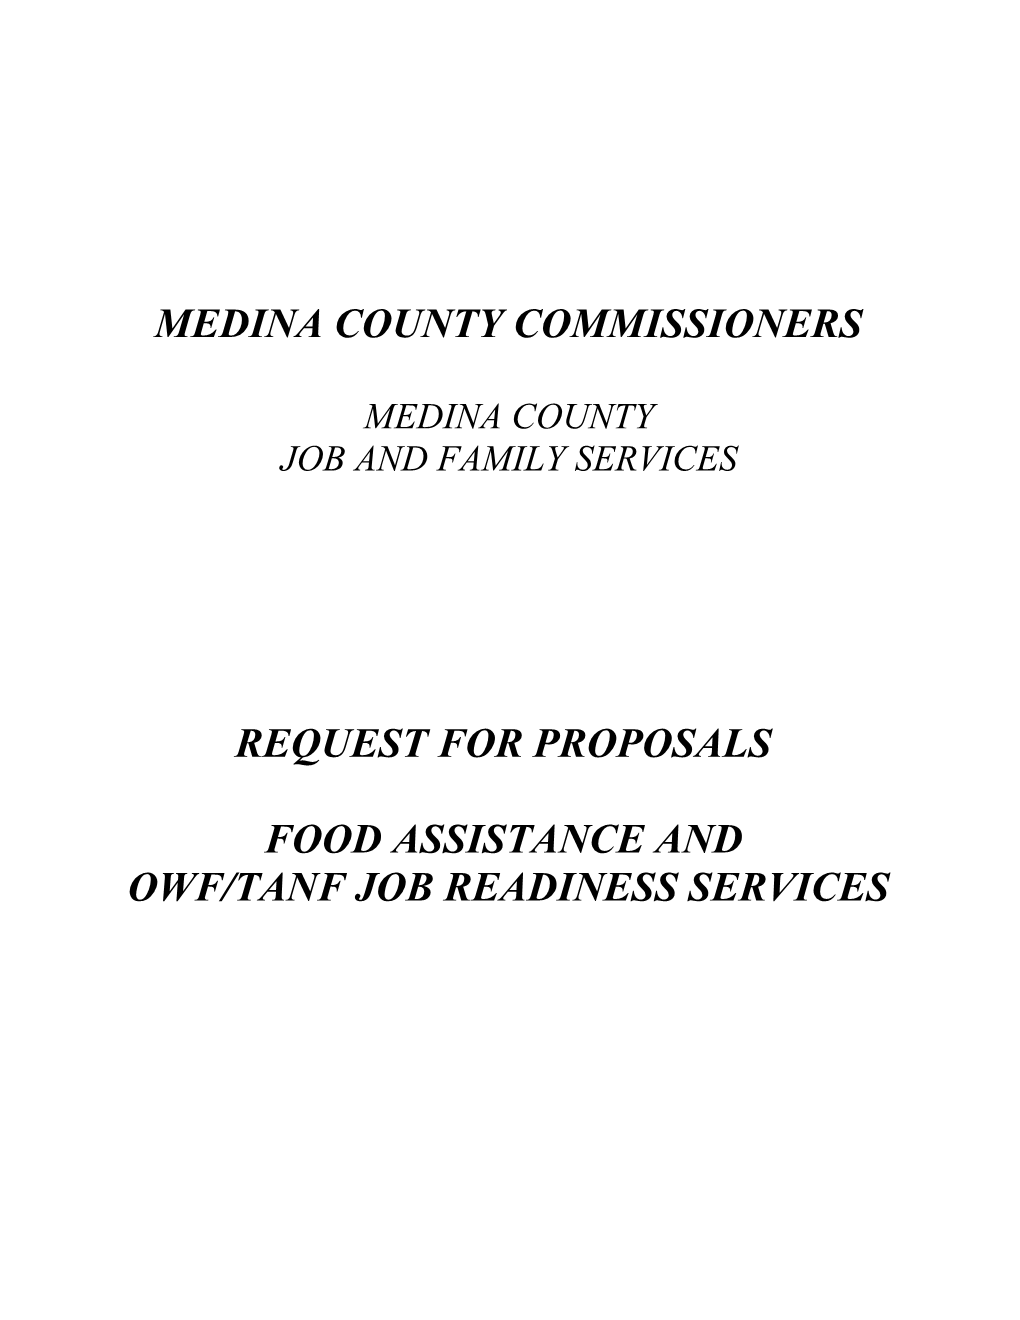 Medina County Commissioners